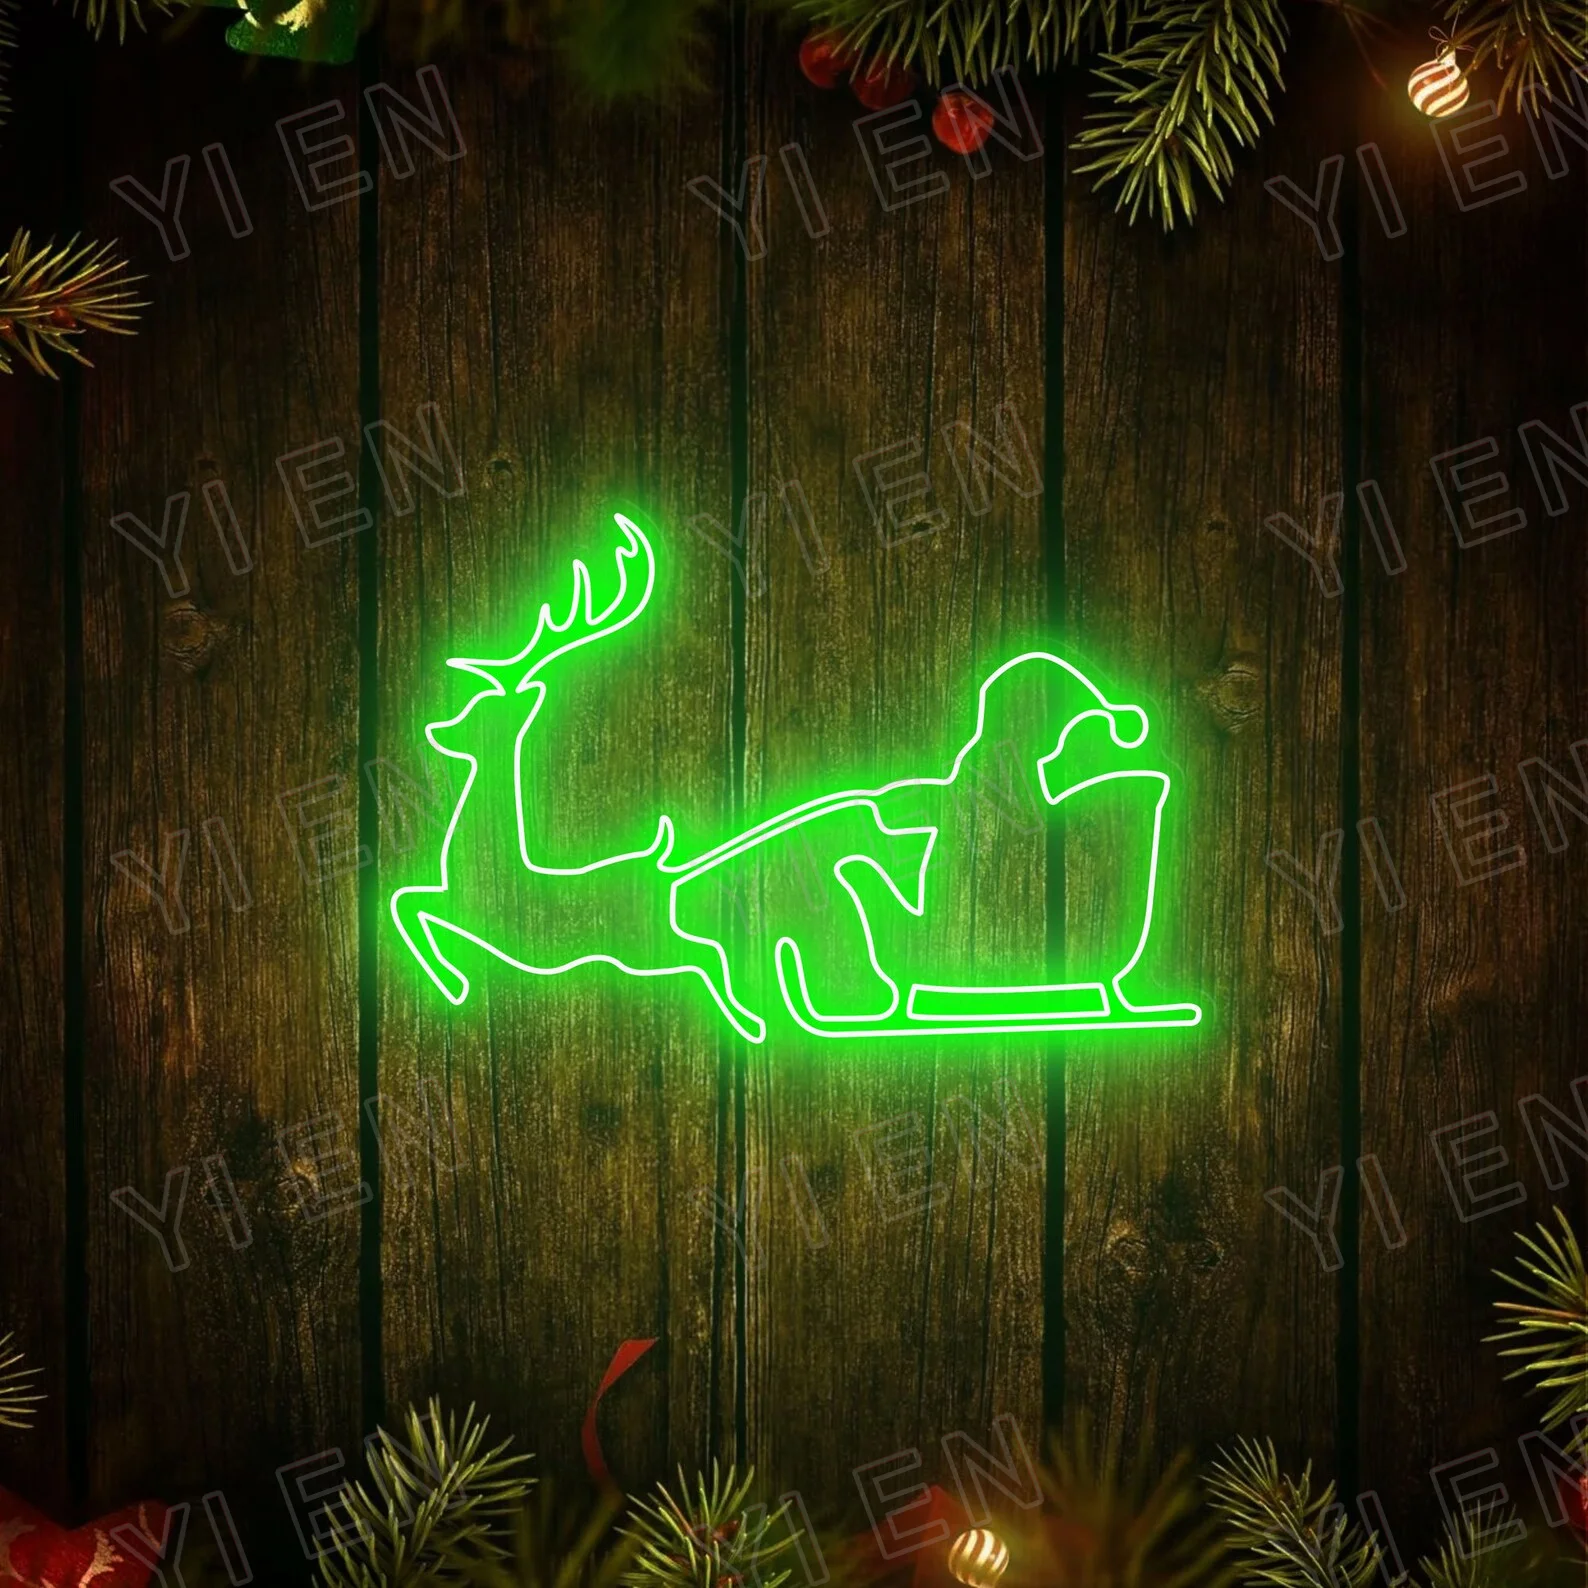 Merry Christmas Neon Sign, Santa Claus Riding A Sleigh With Reindeer, Santa Claus Led Neon Sign, Christmas Decor, Neon Wall Art